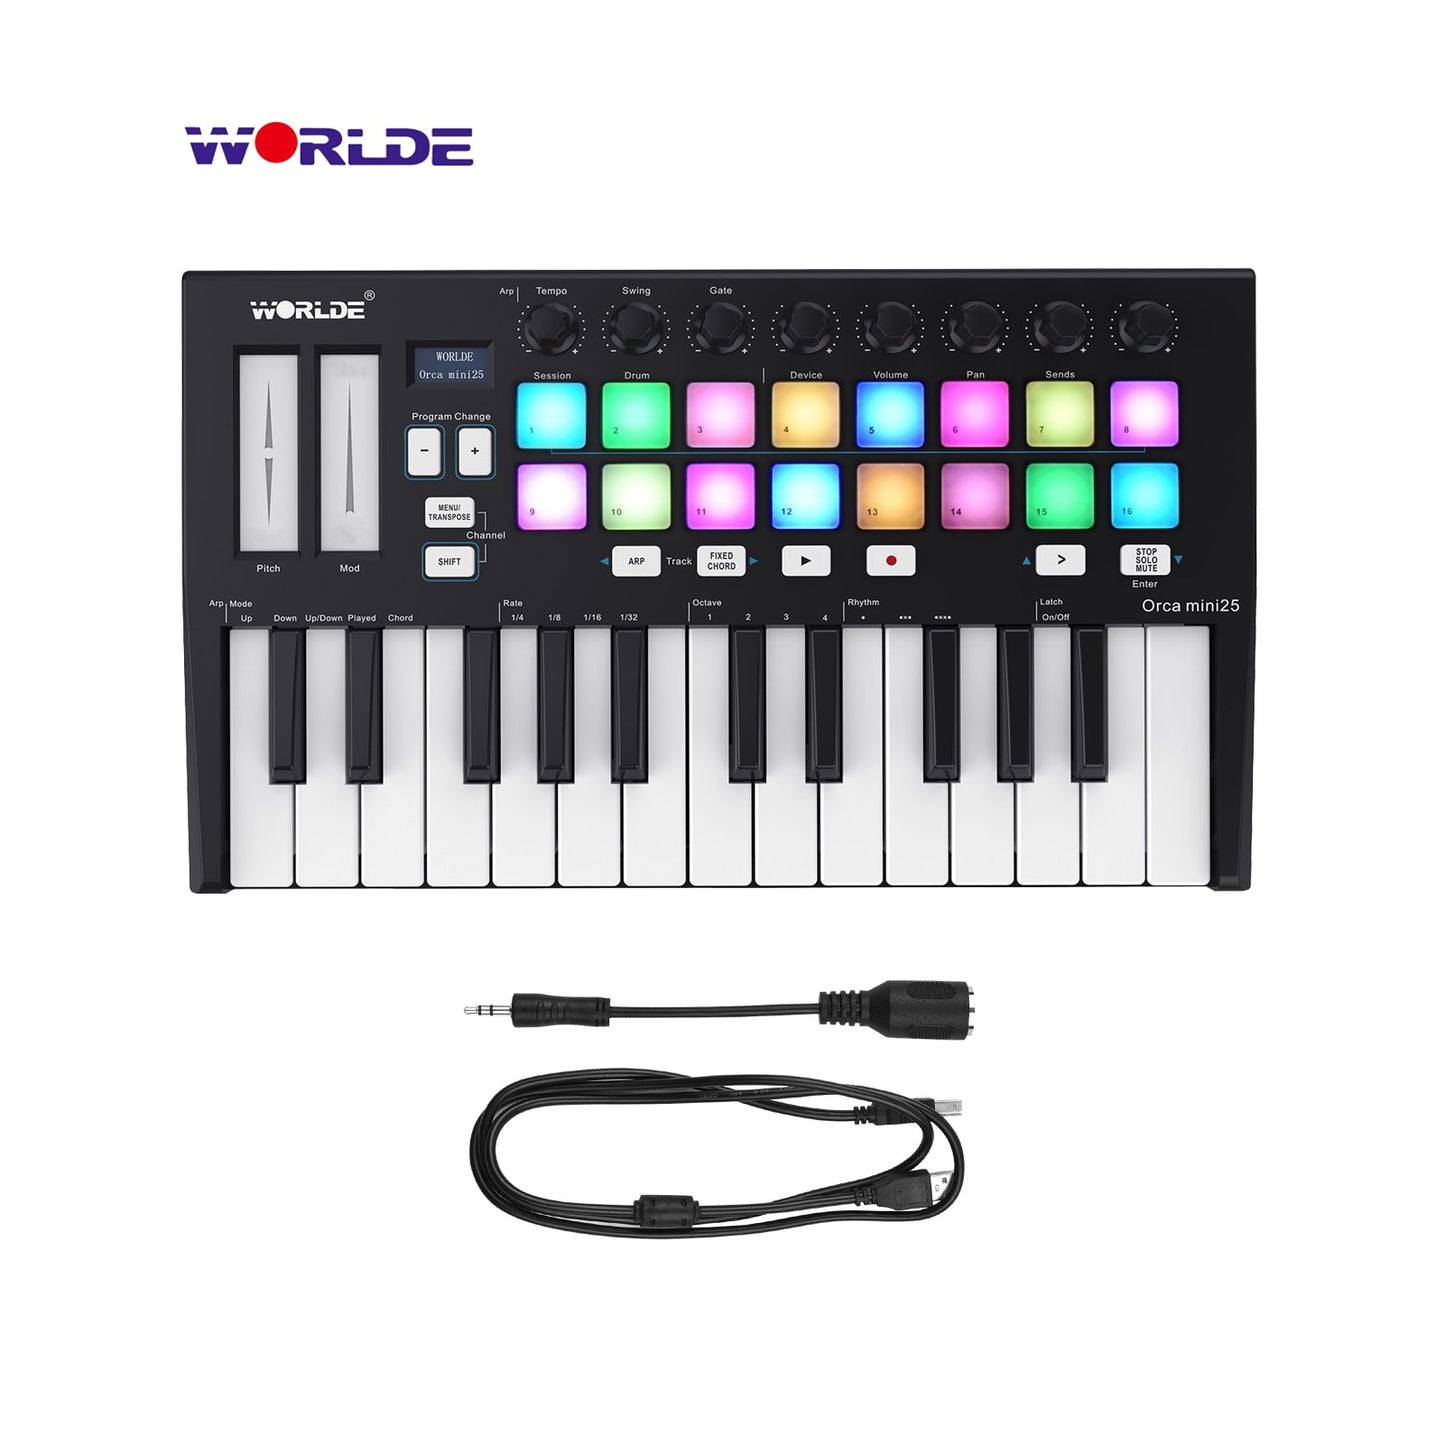 WORLDE Panda MINI II 25-Key USB MIDI Keyboard Controller USB MIDI Controller with 8 RGB Backlit Trigger Pads with RGB backlit